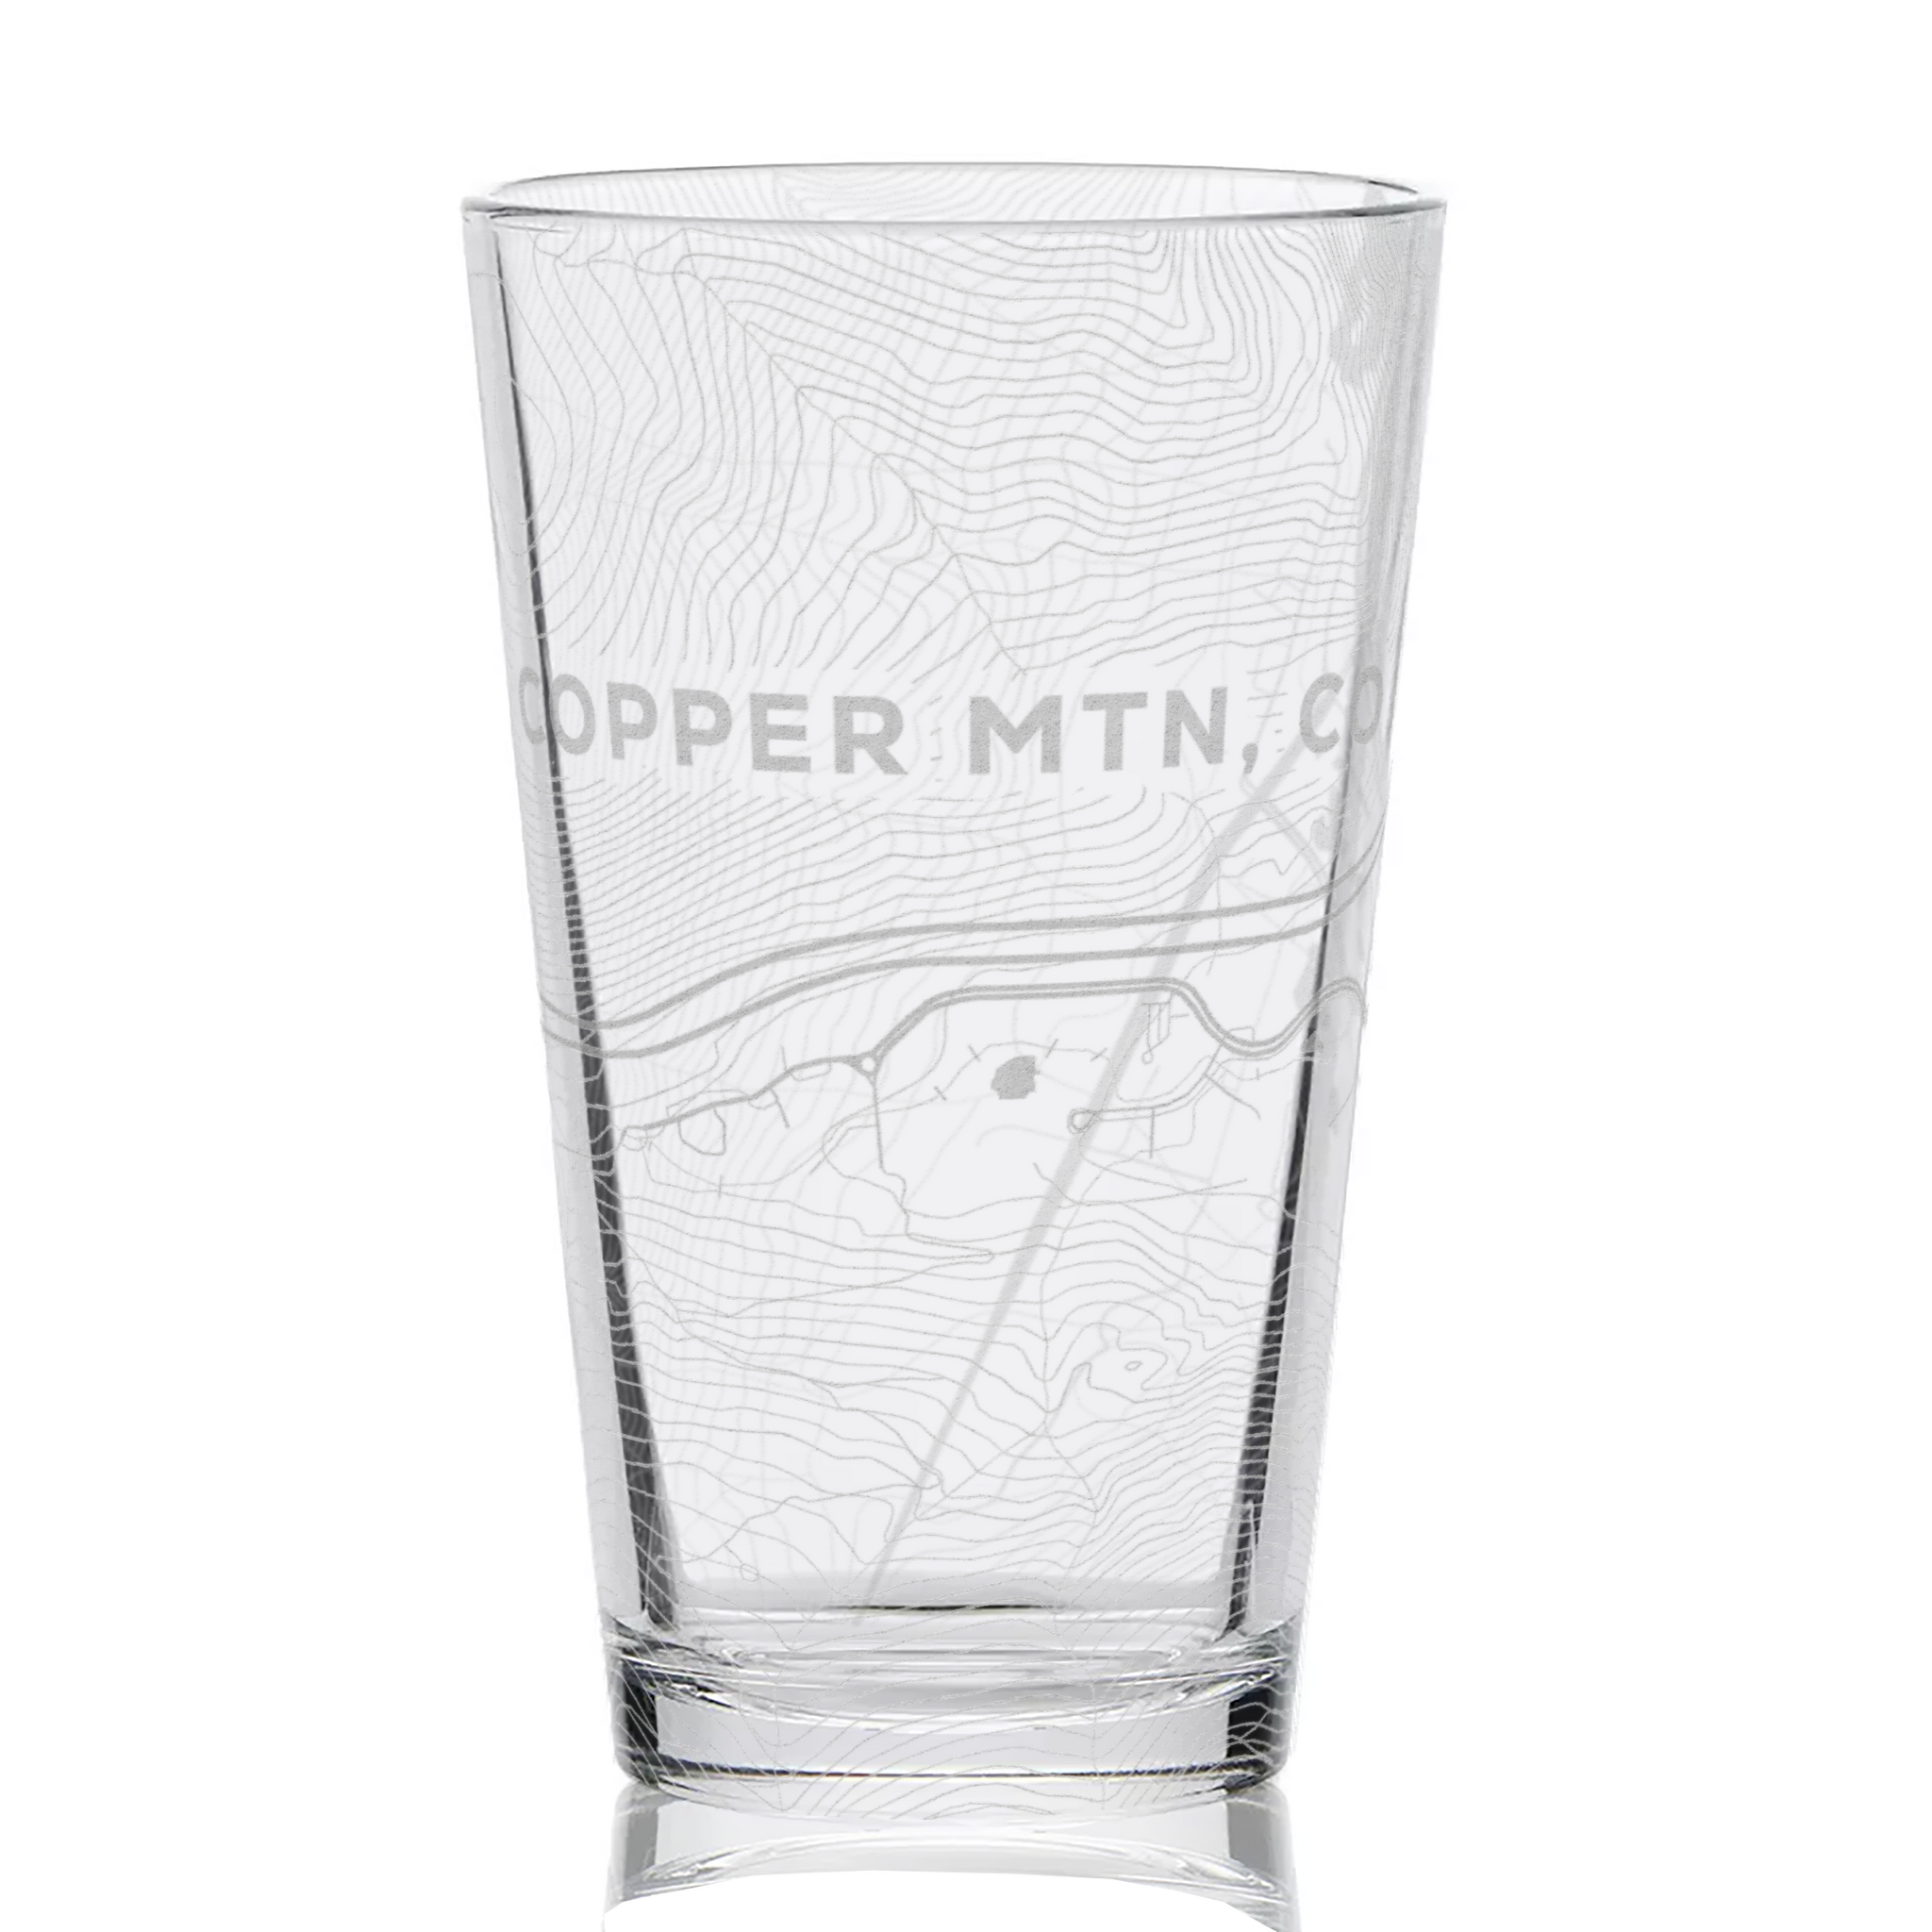 COPPER MTN, CO Pint Glass